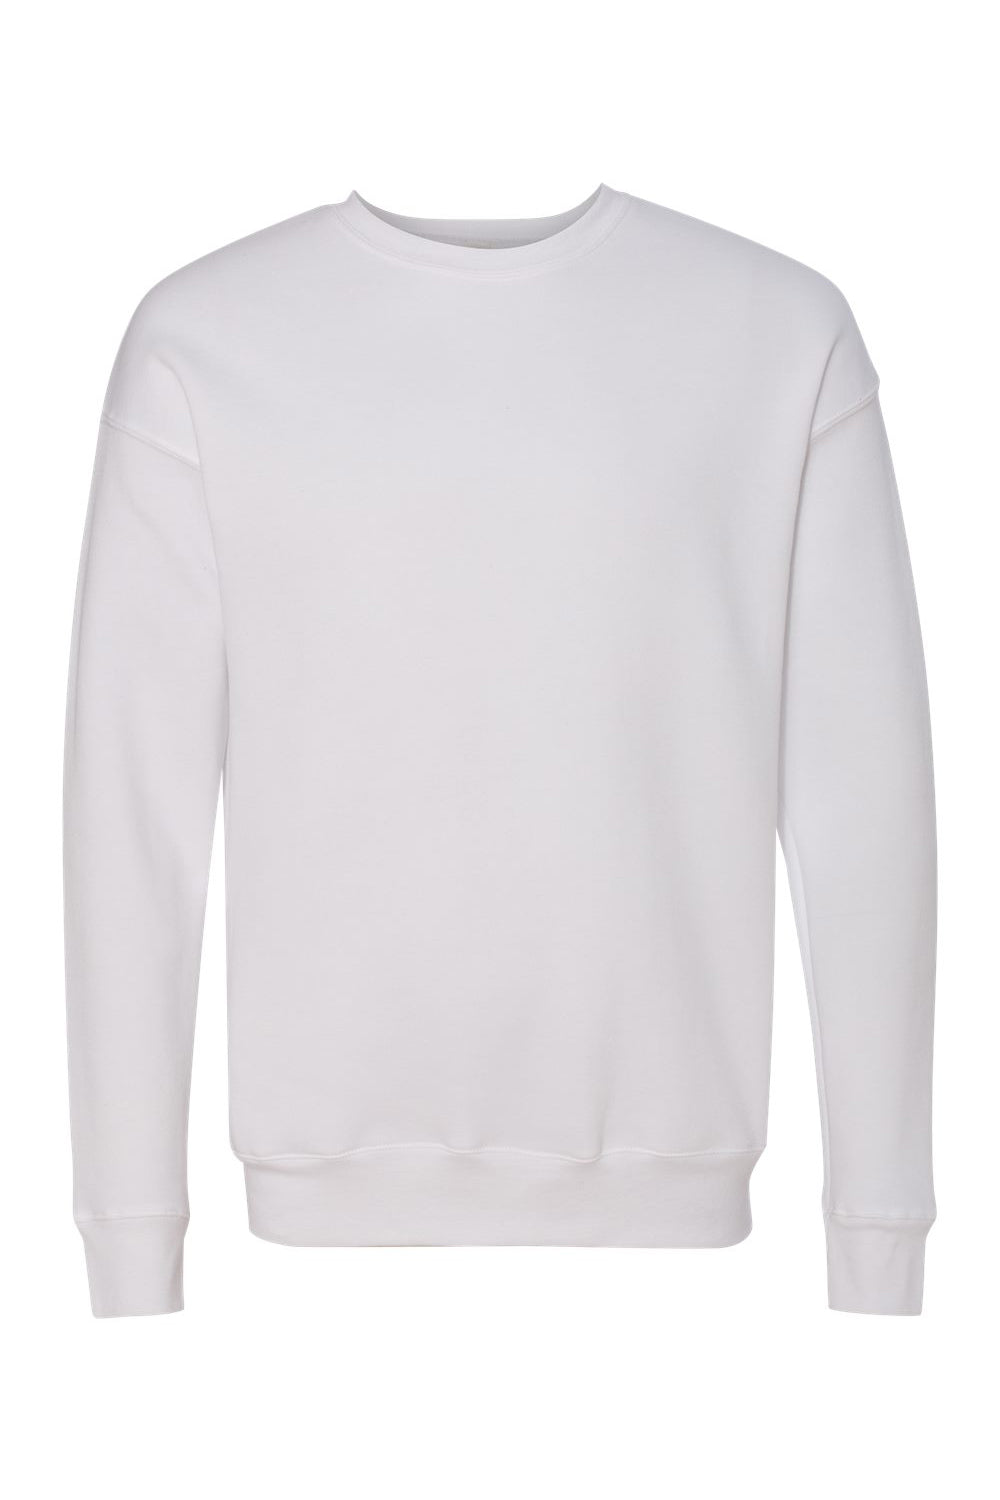 Bella + Canvas BC3945/3945 Mens Fleece Crewneck Sweatshirt White Flat Front